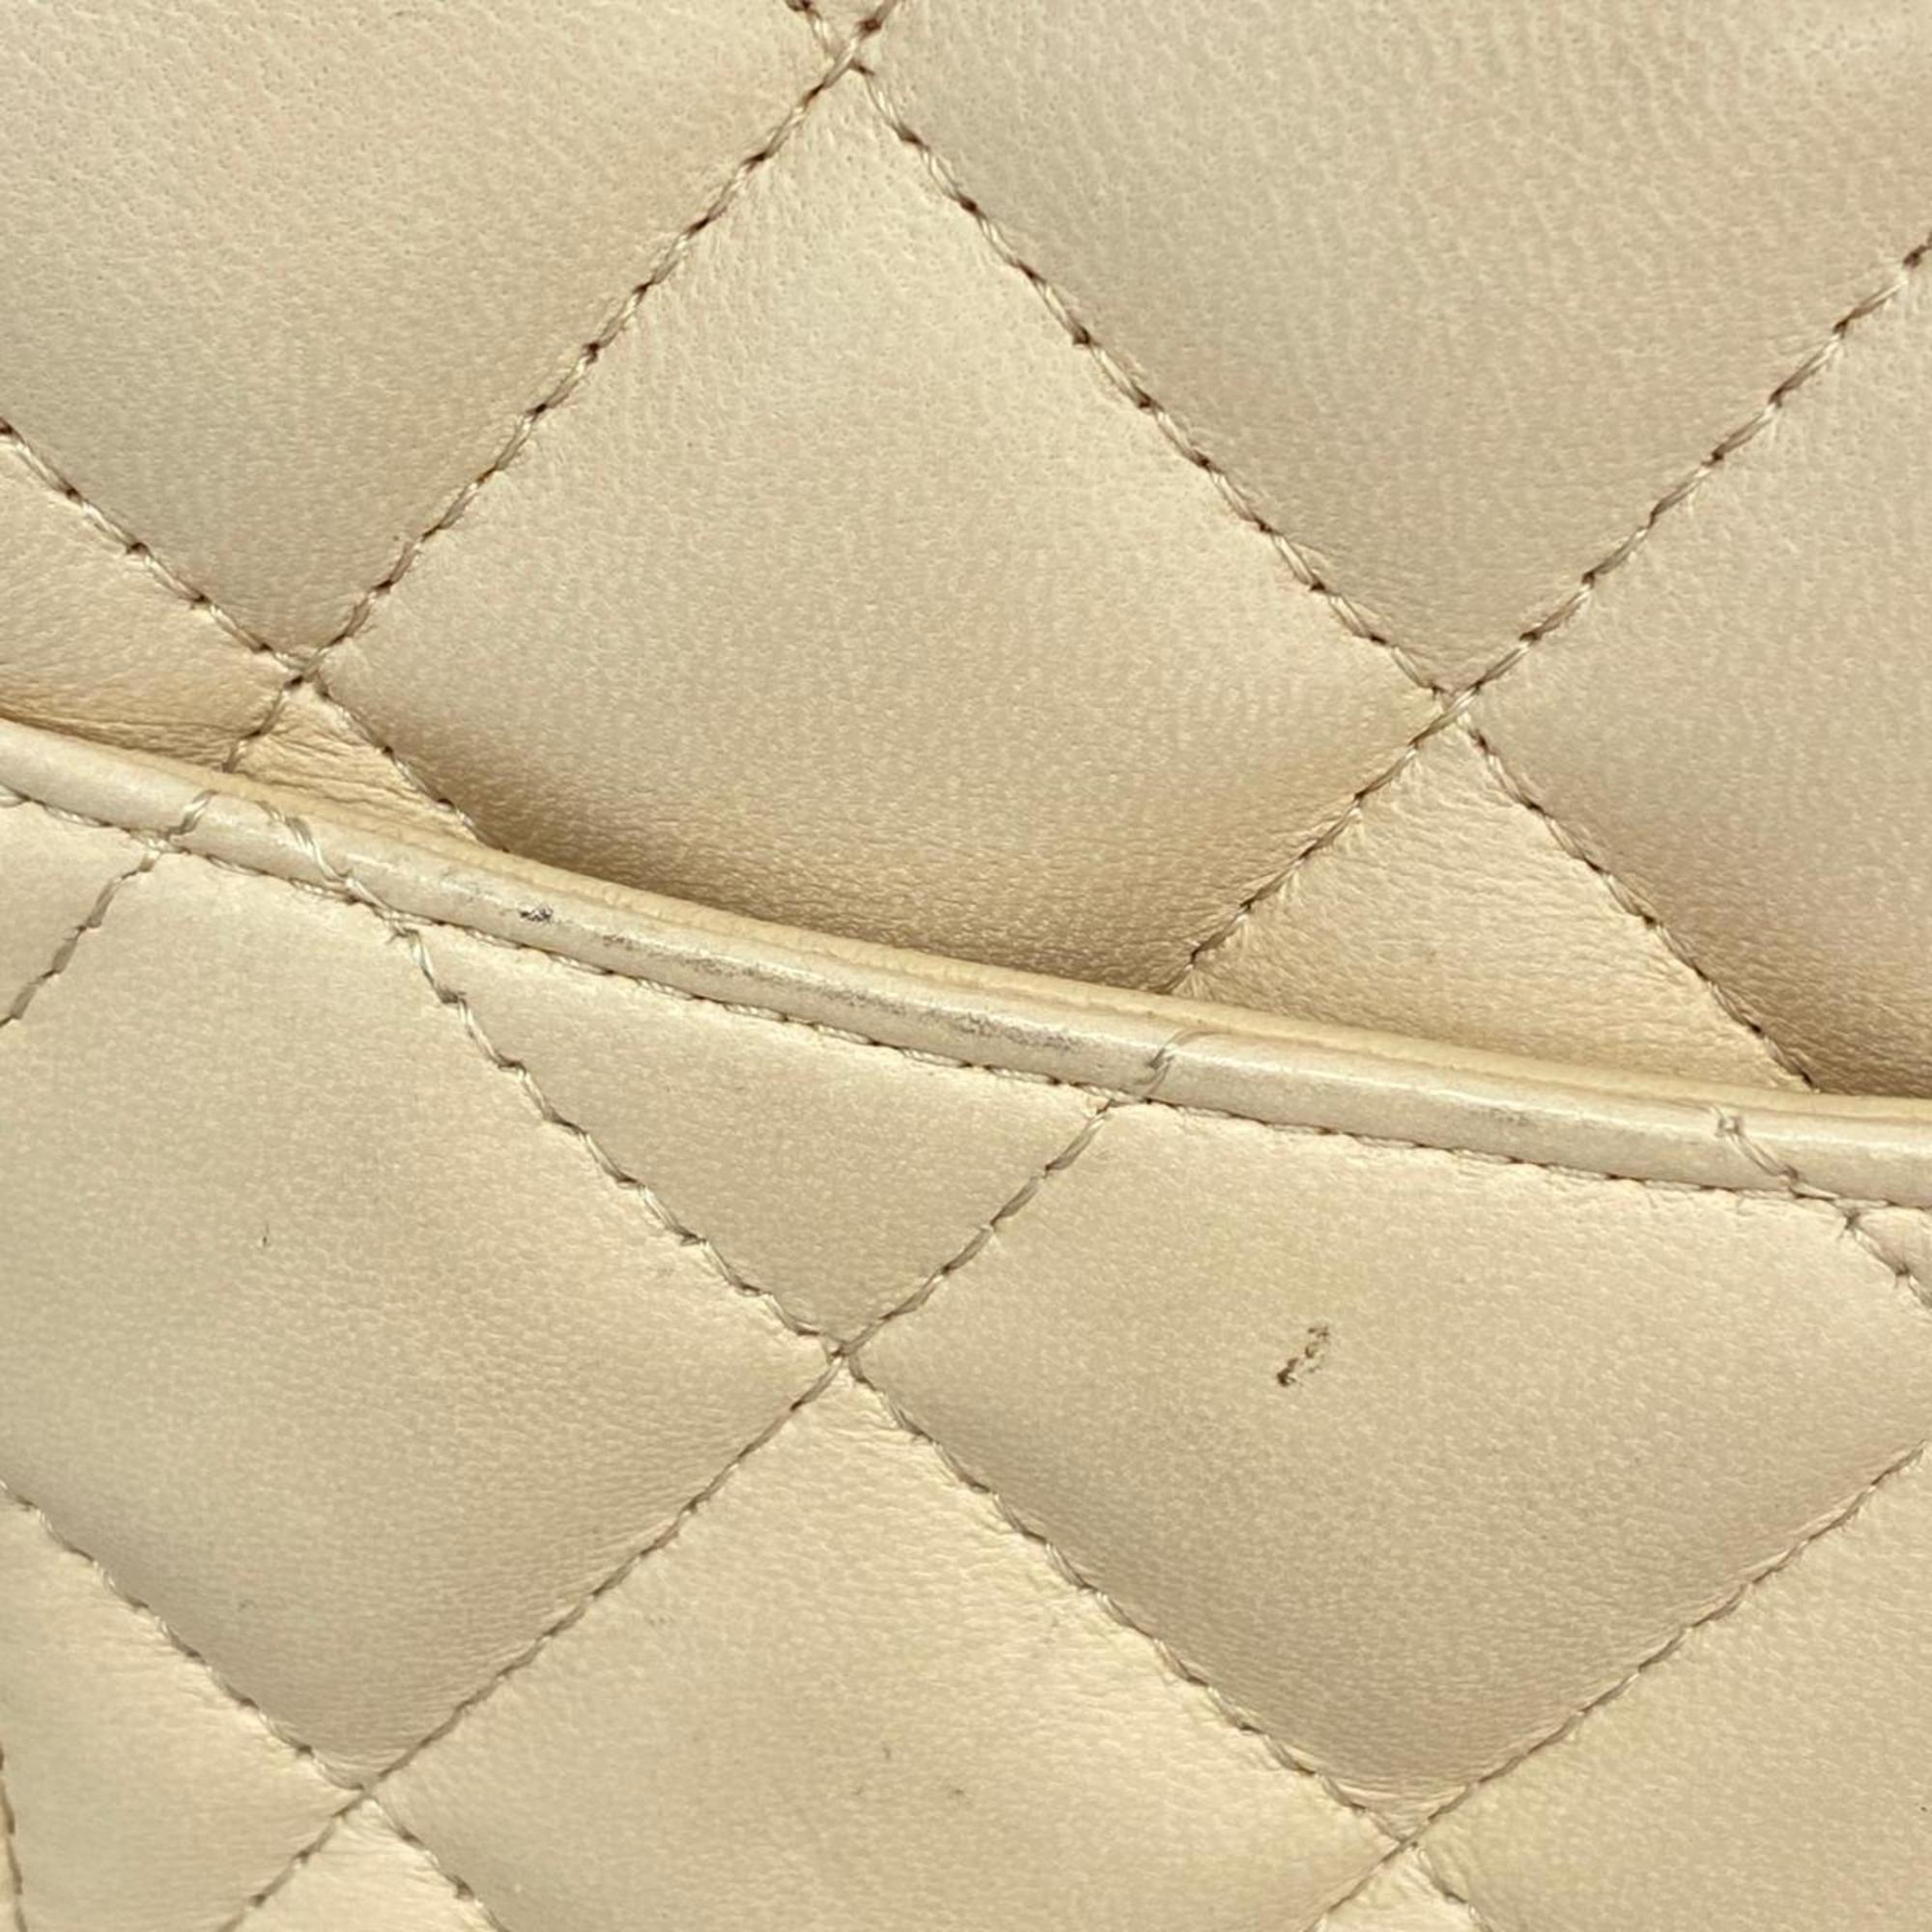 Chanel Shoulder Bag Matelasse W Chain Lambskin White Women's